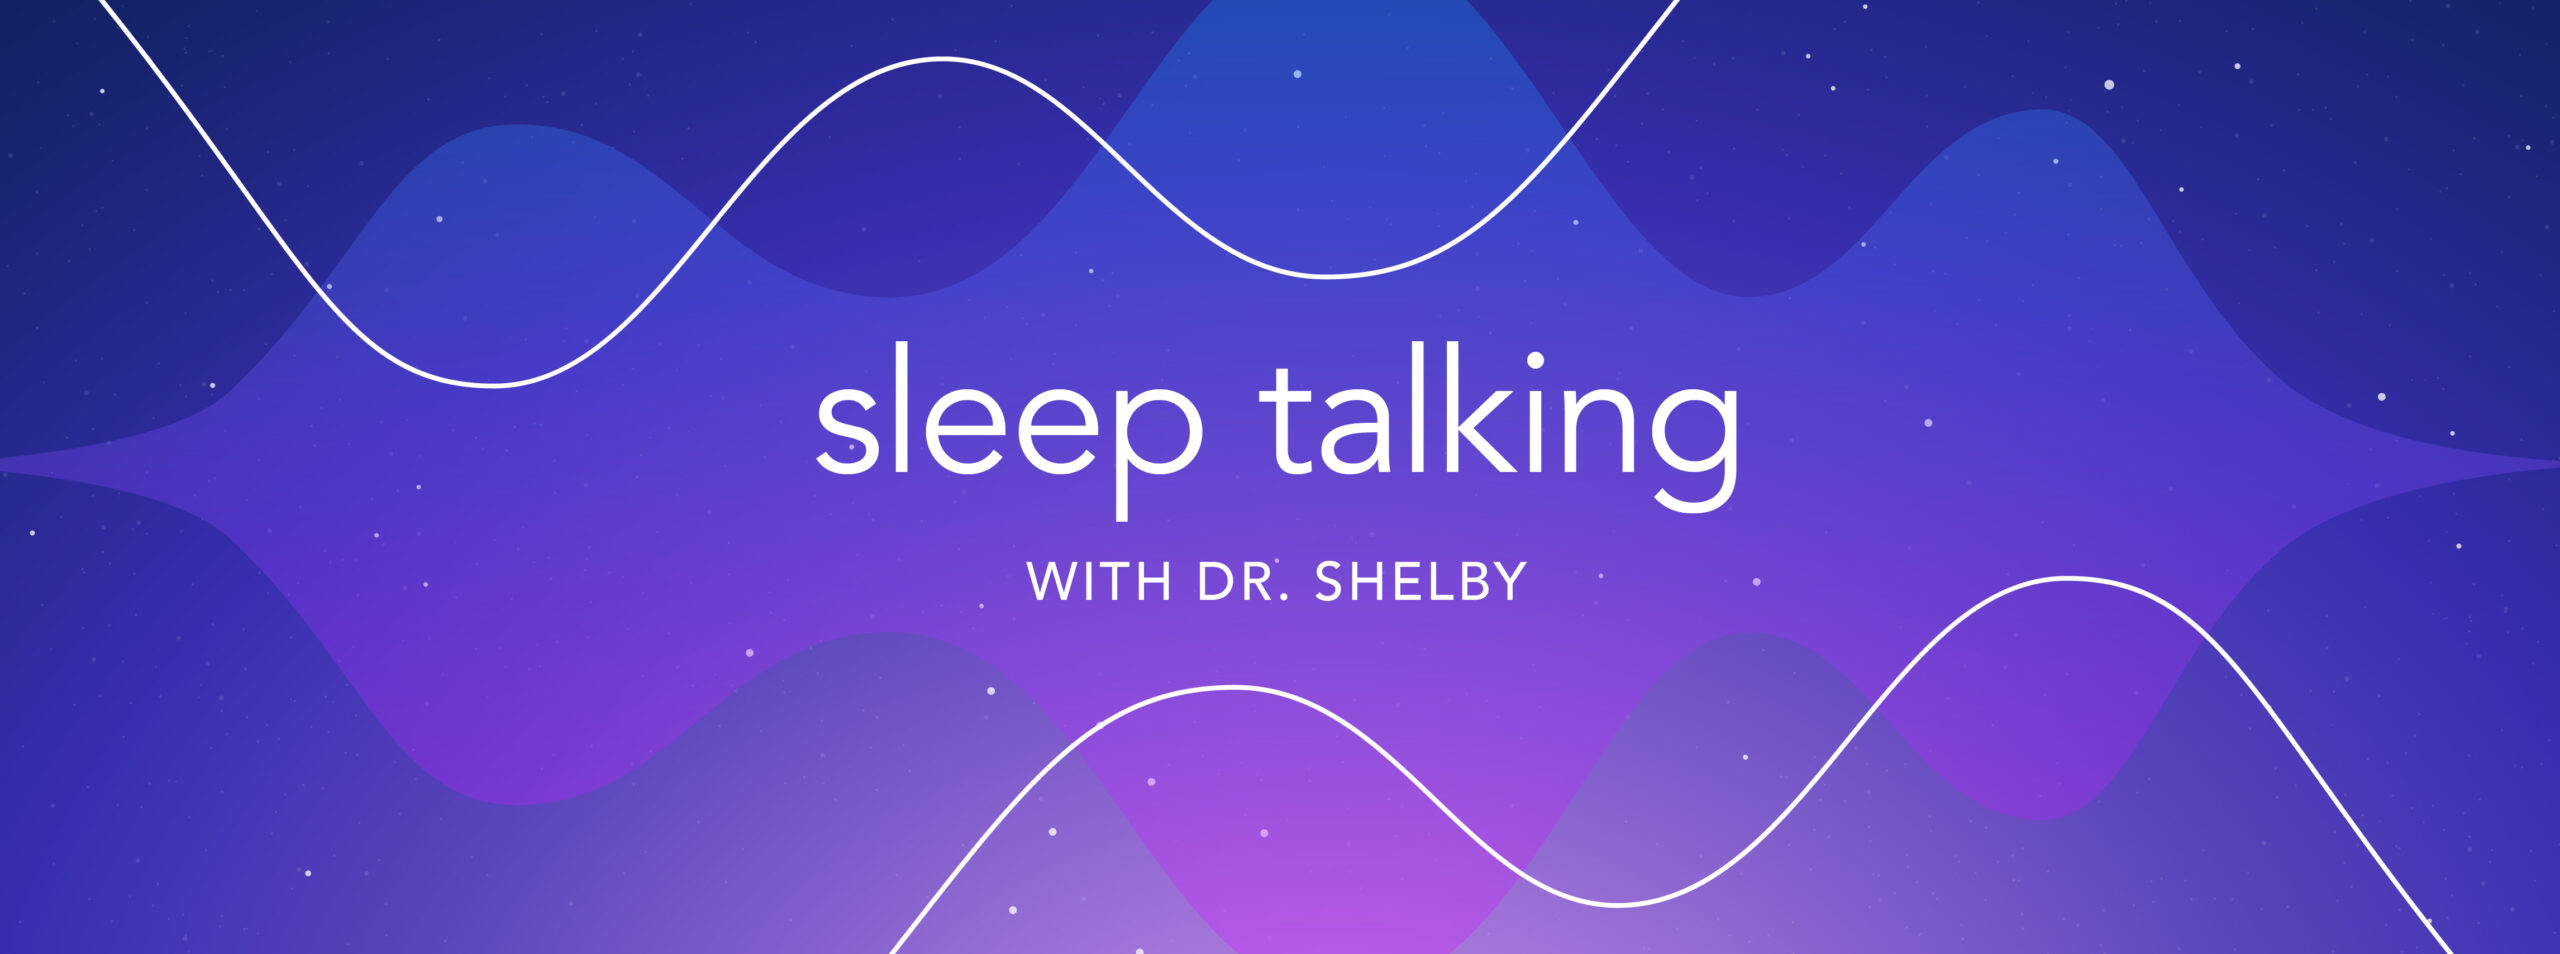 Truth-about-melatonin-Prof Helen Burgess Podcast